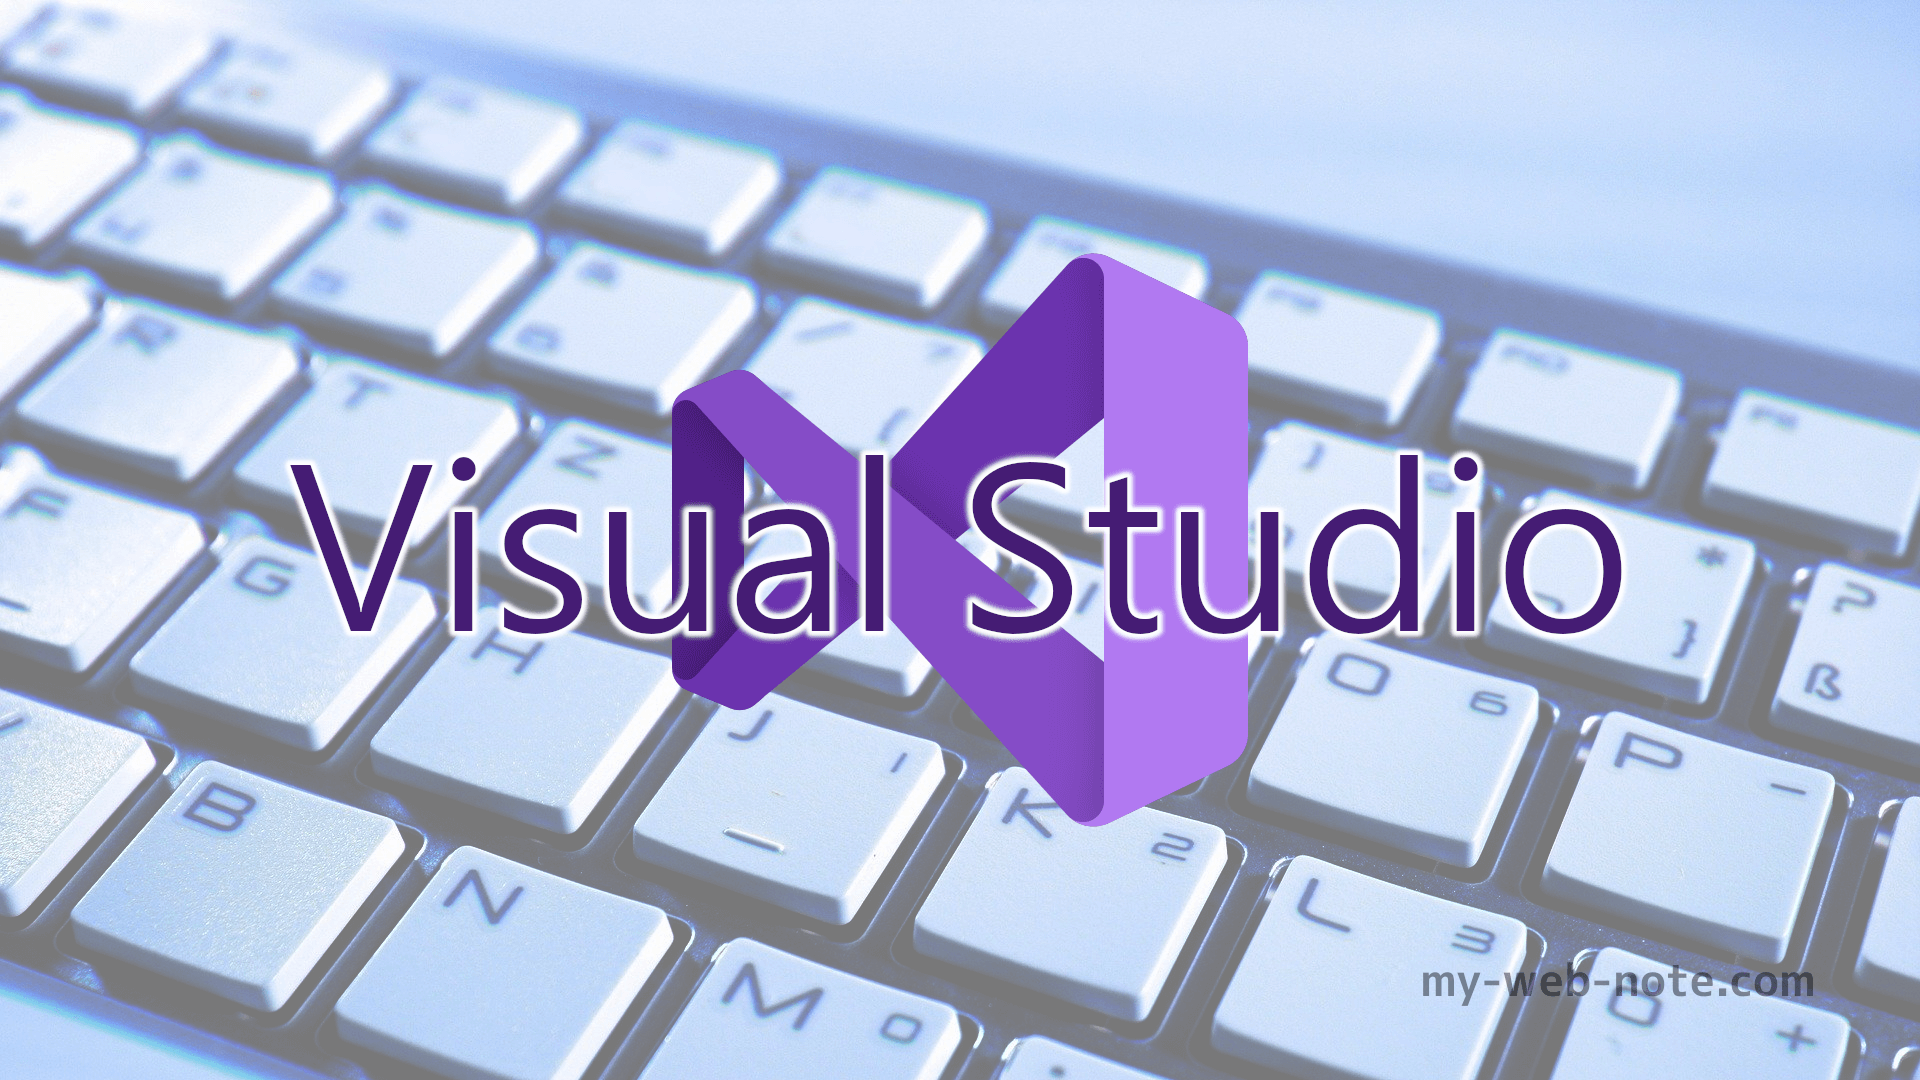 Visual Stadioのプロジェクトフォルダをコピーして、別名のプロジェクトを作成する。